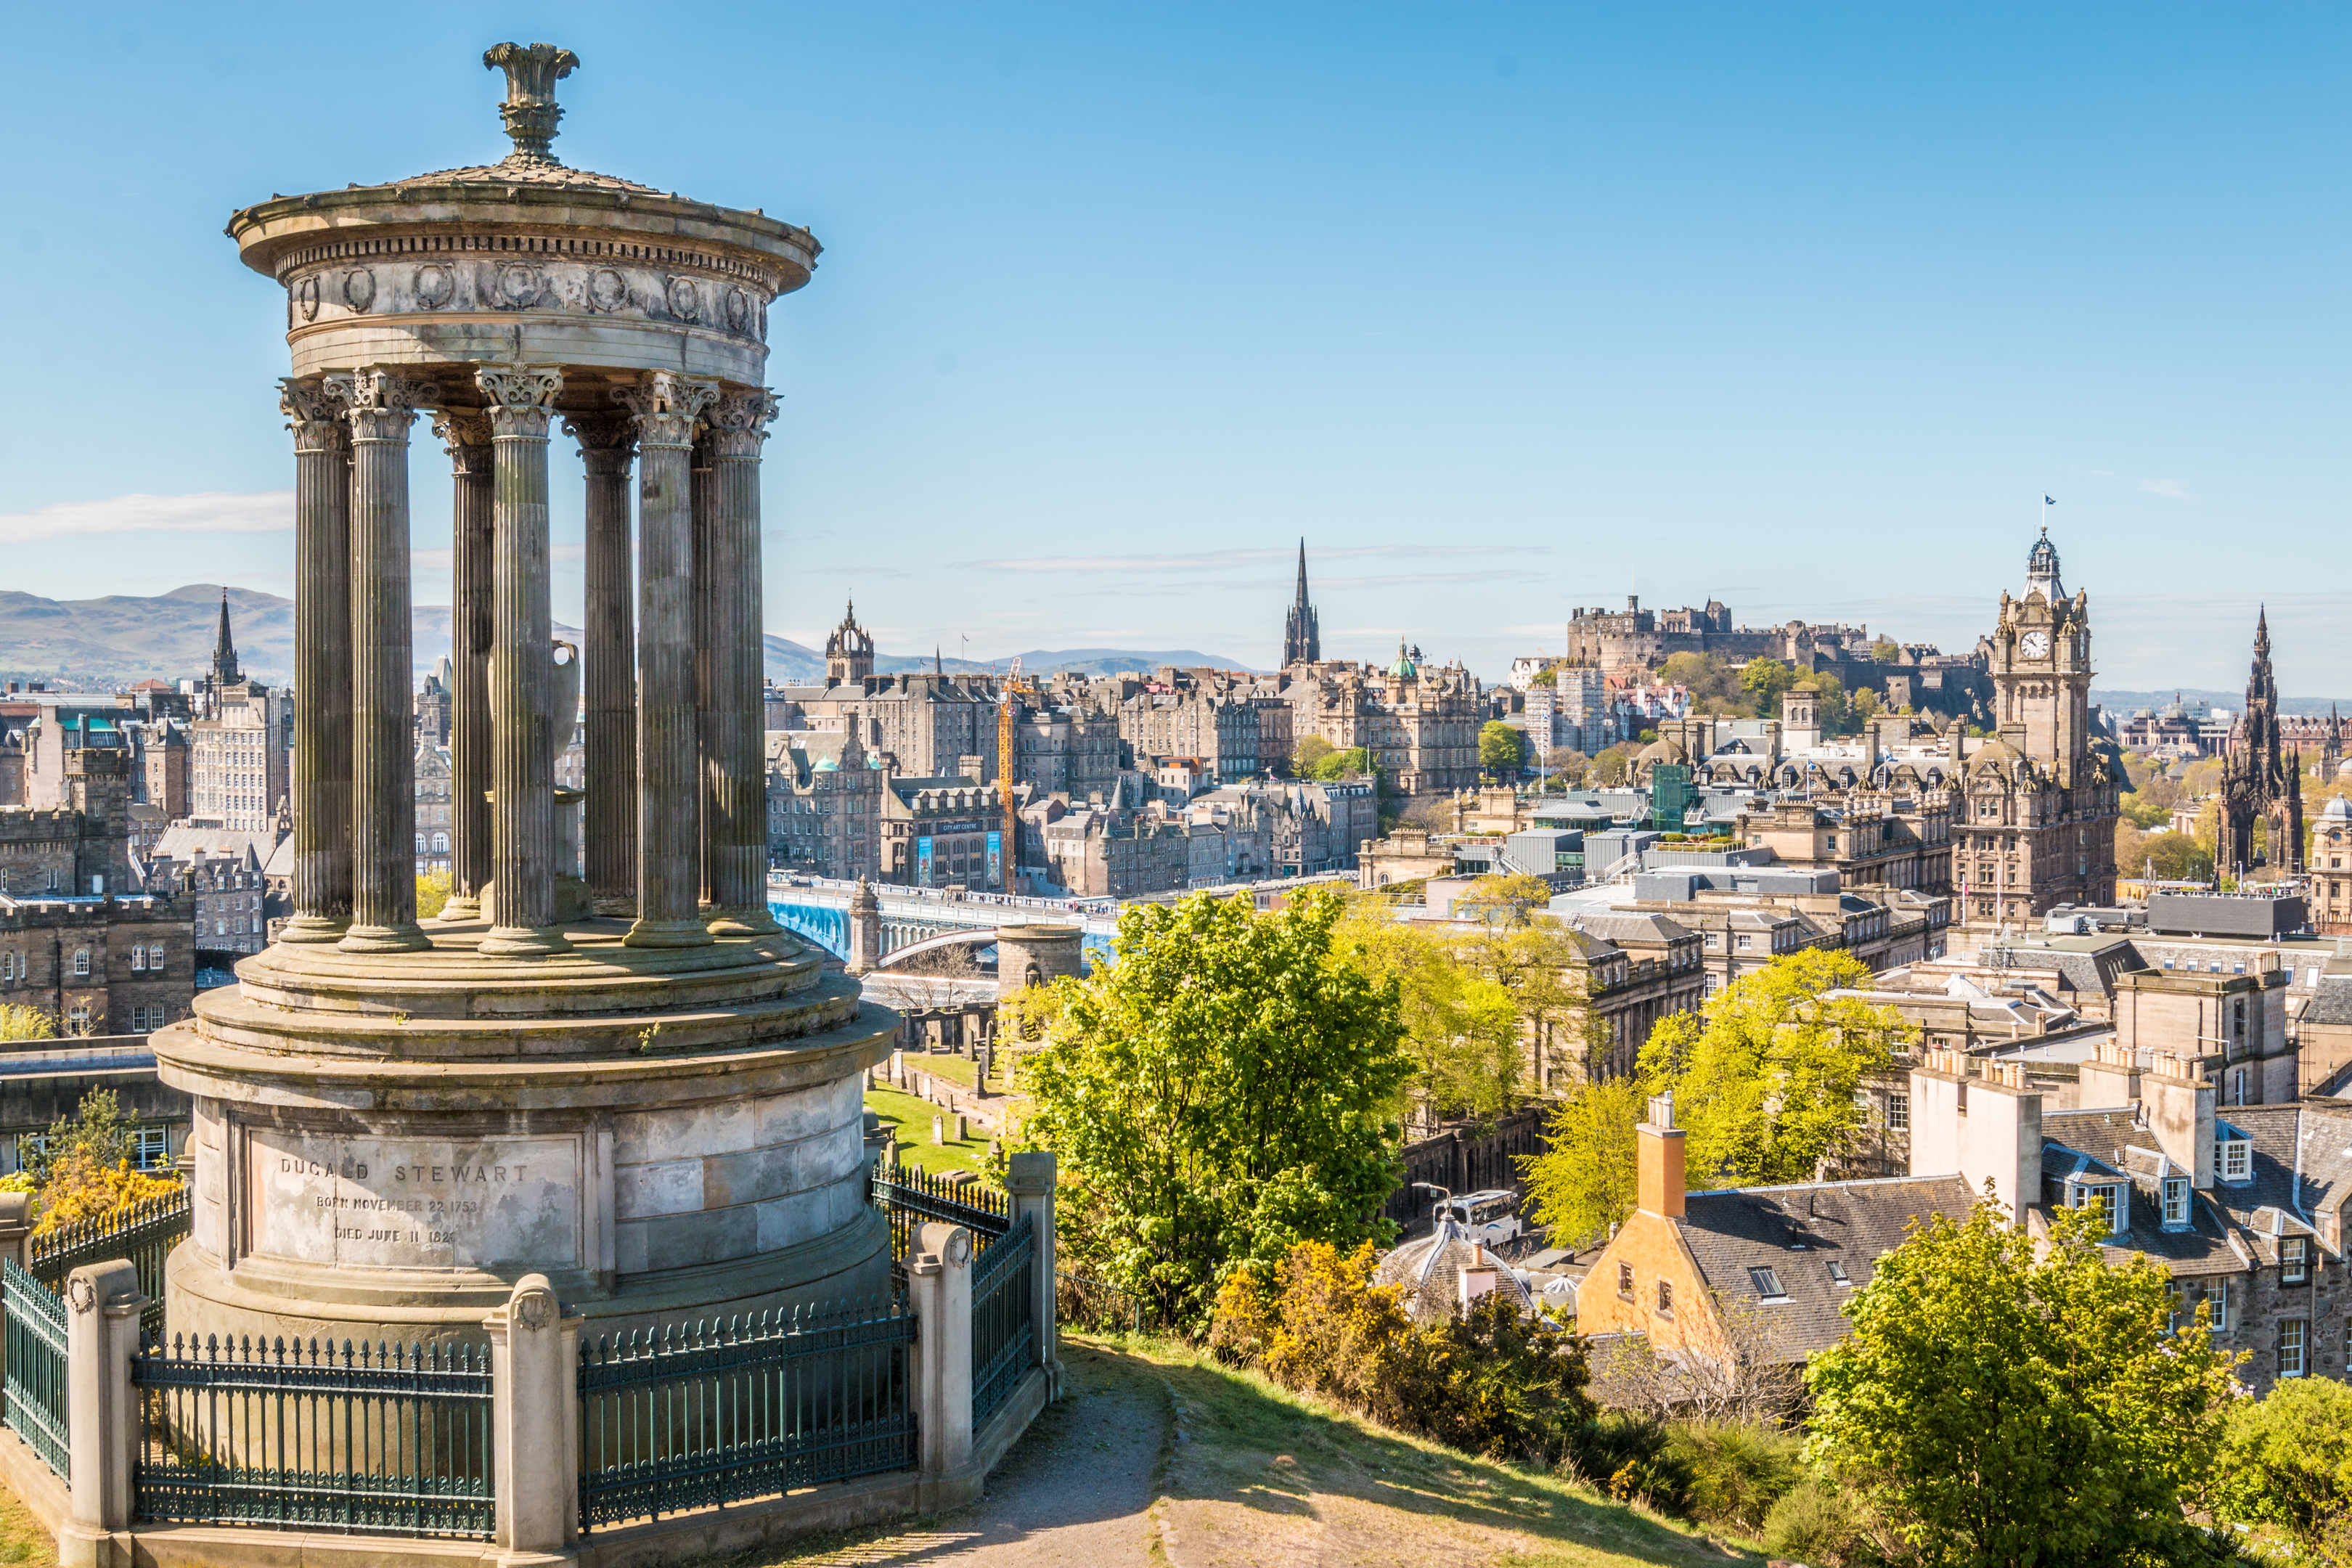 Edinburgh (Getty Images/iStock)